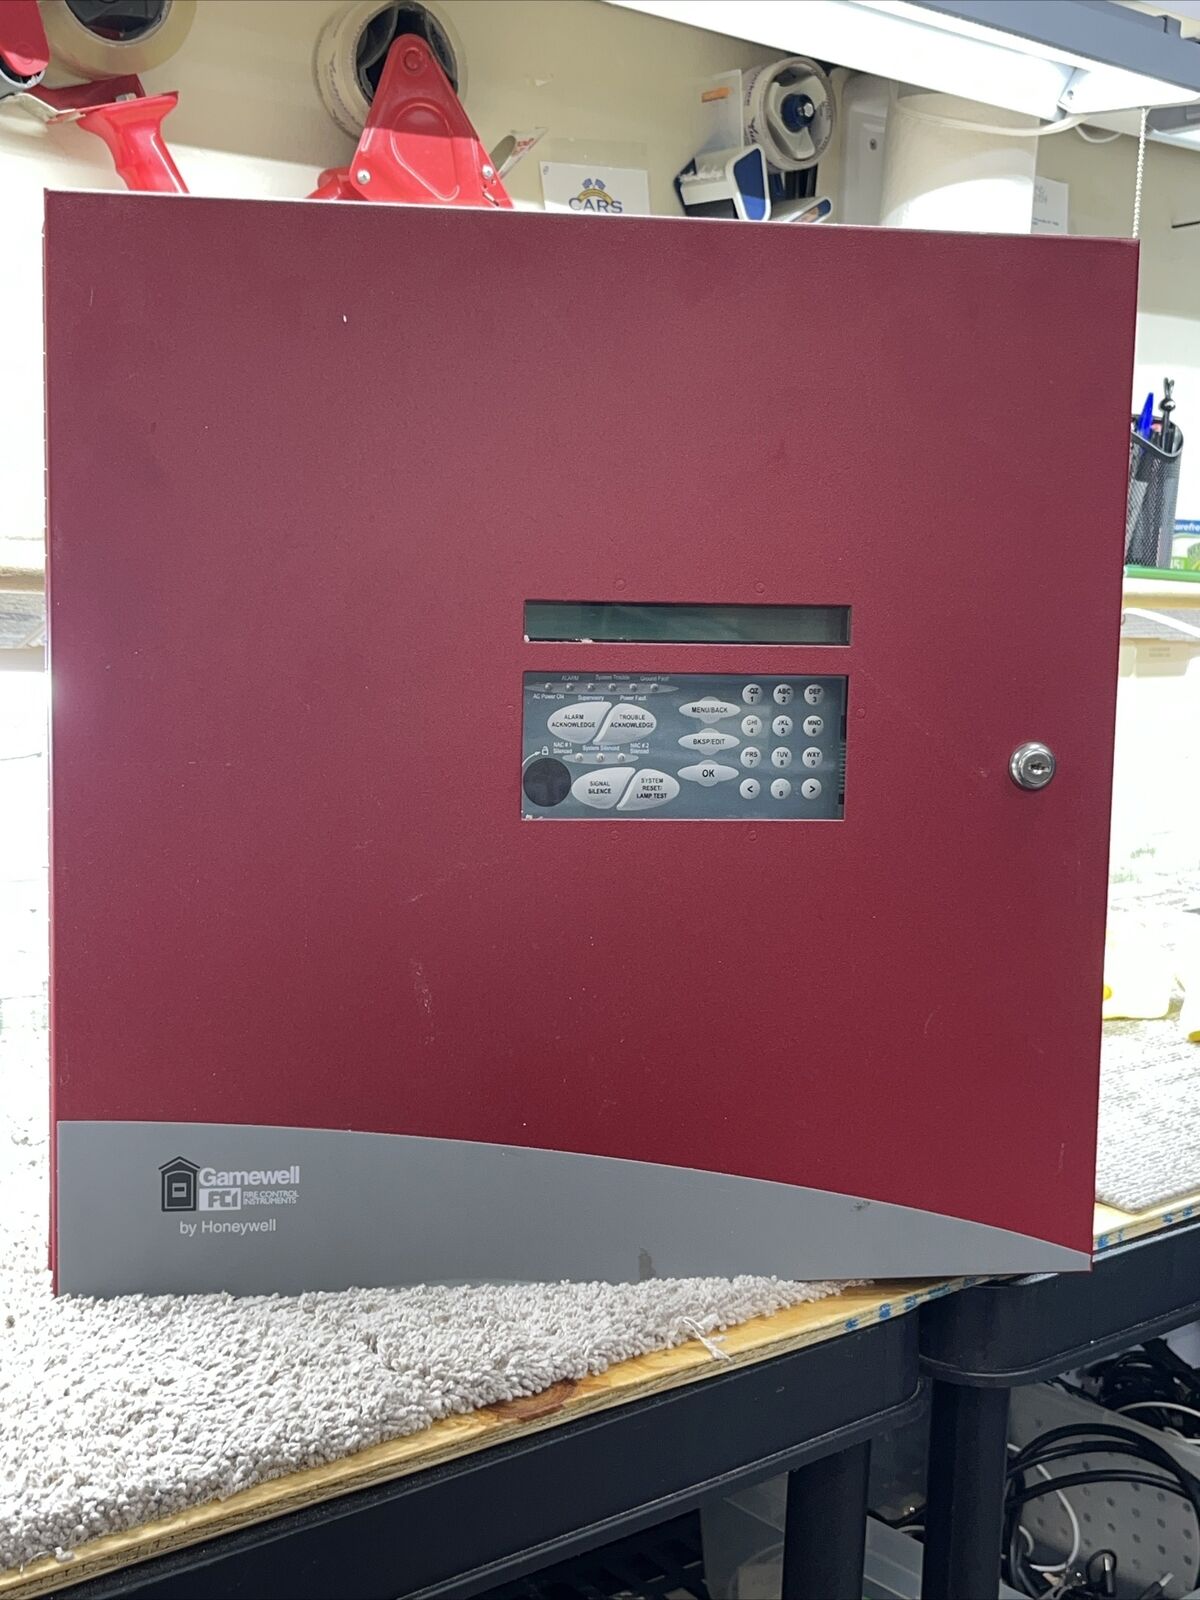 Gamewell-FCI 7100 Analog Fire Alarm Control Panel 622571